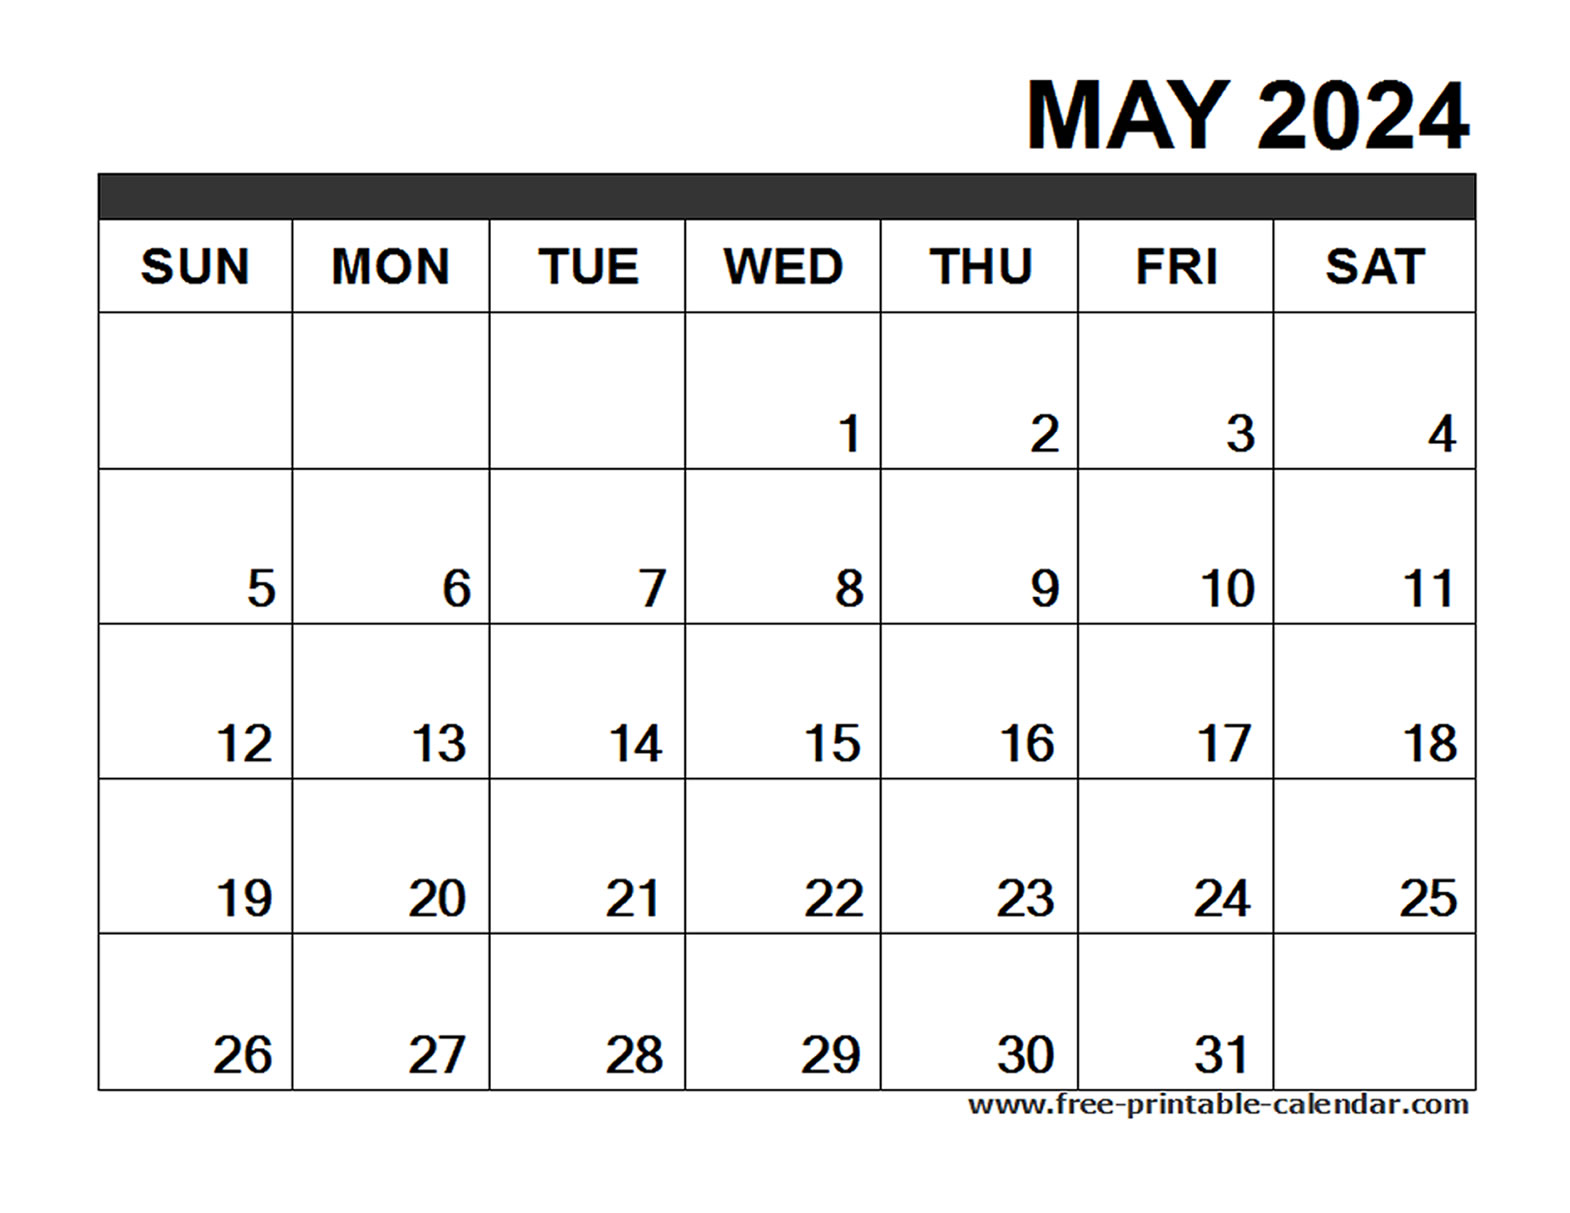 May 2024 Calendar Printable - Free-printable-calendar.com